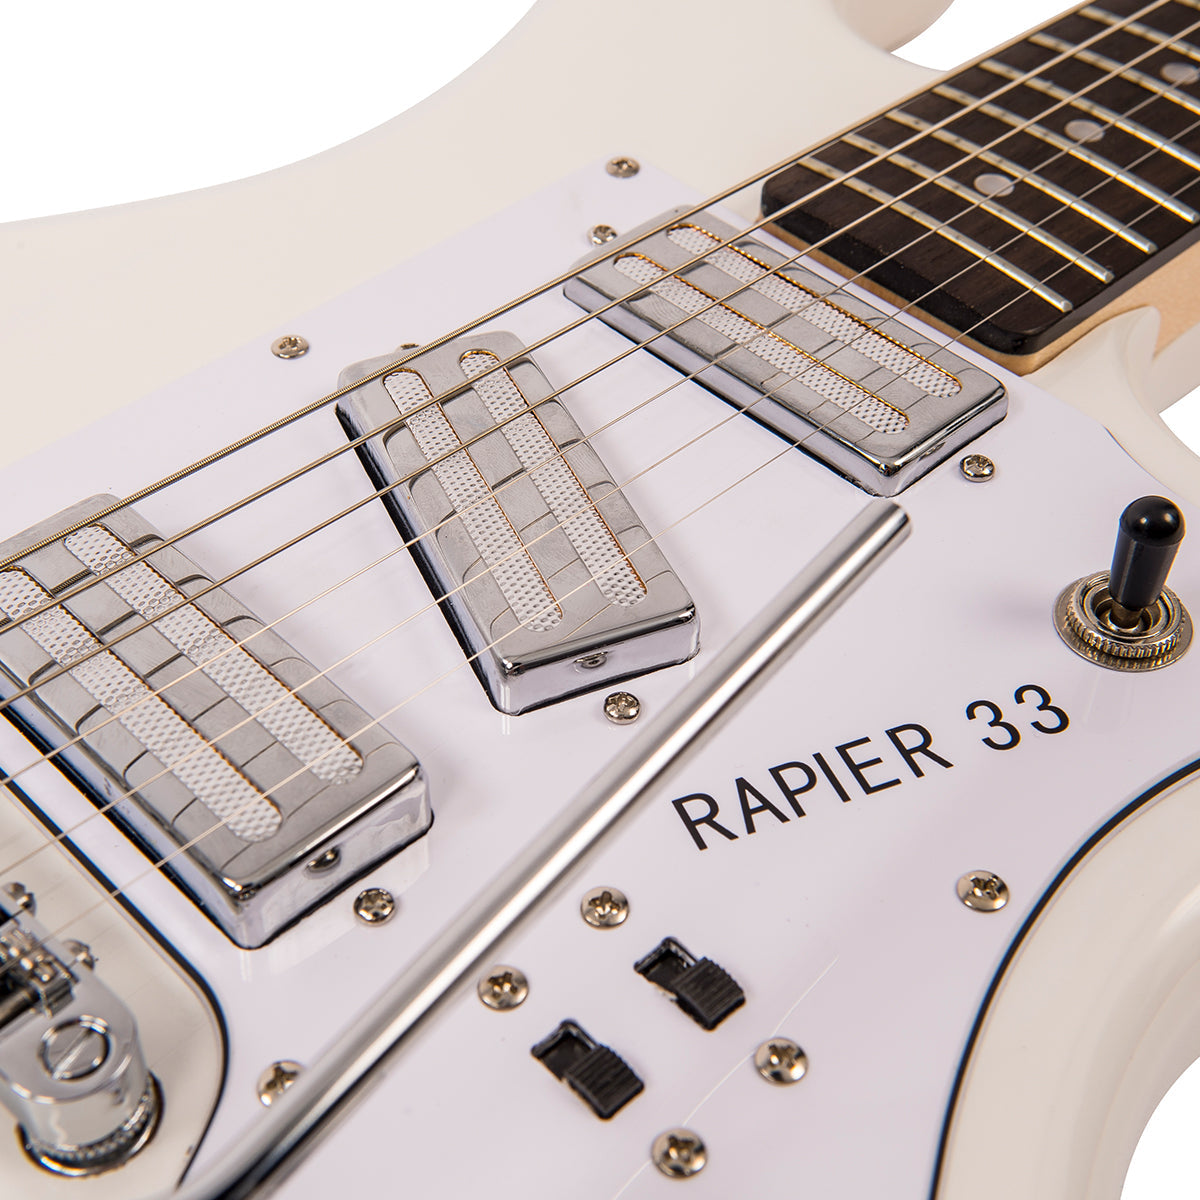 Rapier 33 Electric Guitar ~ Artic White